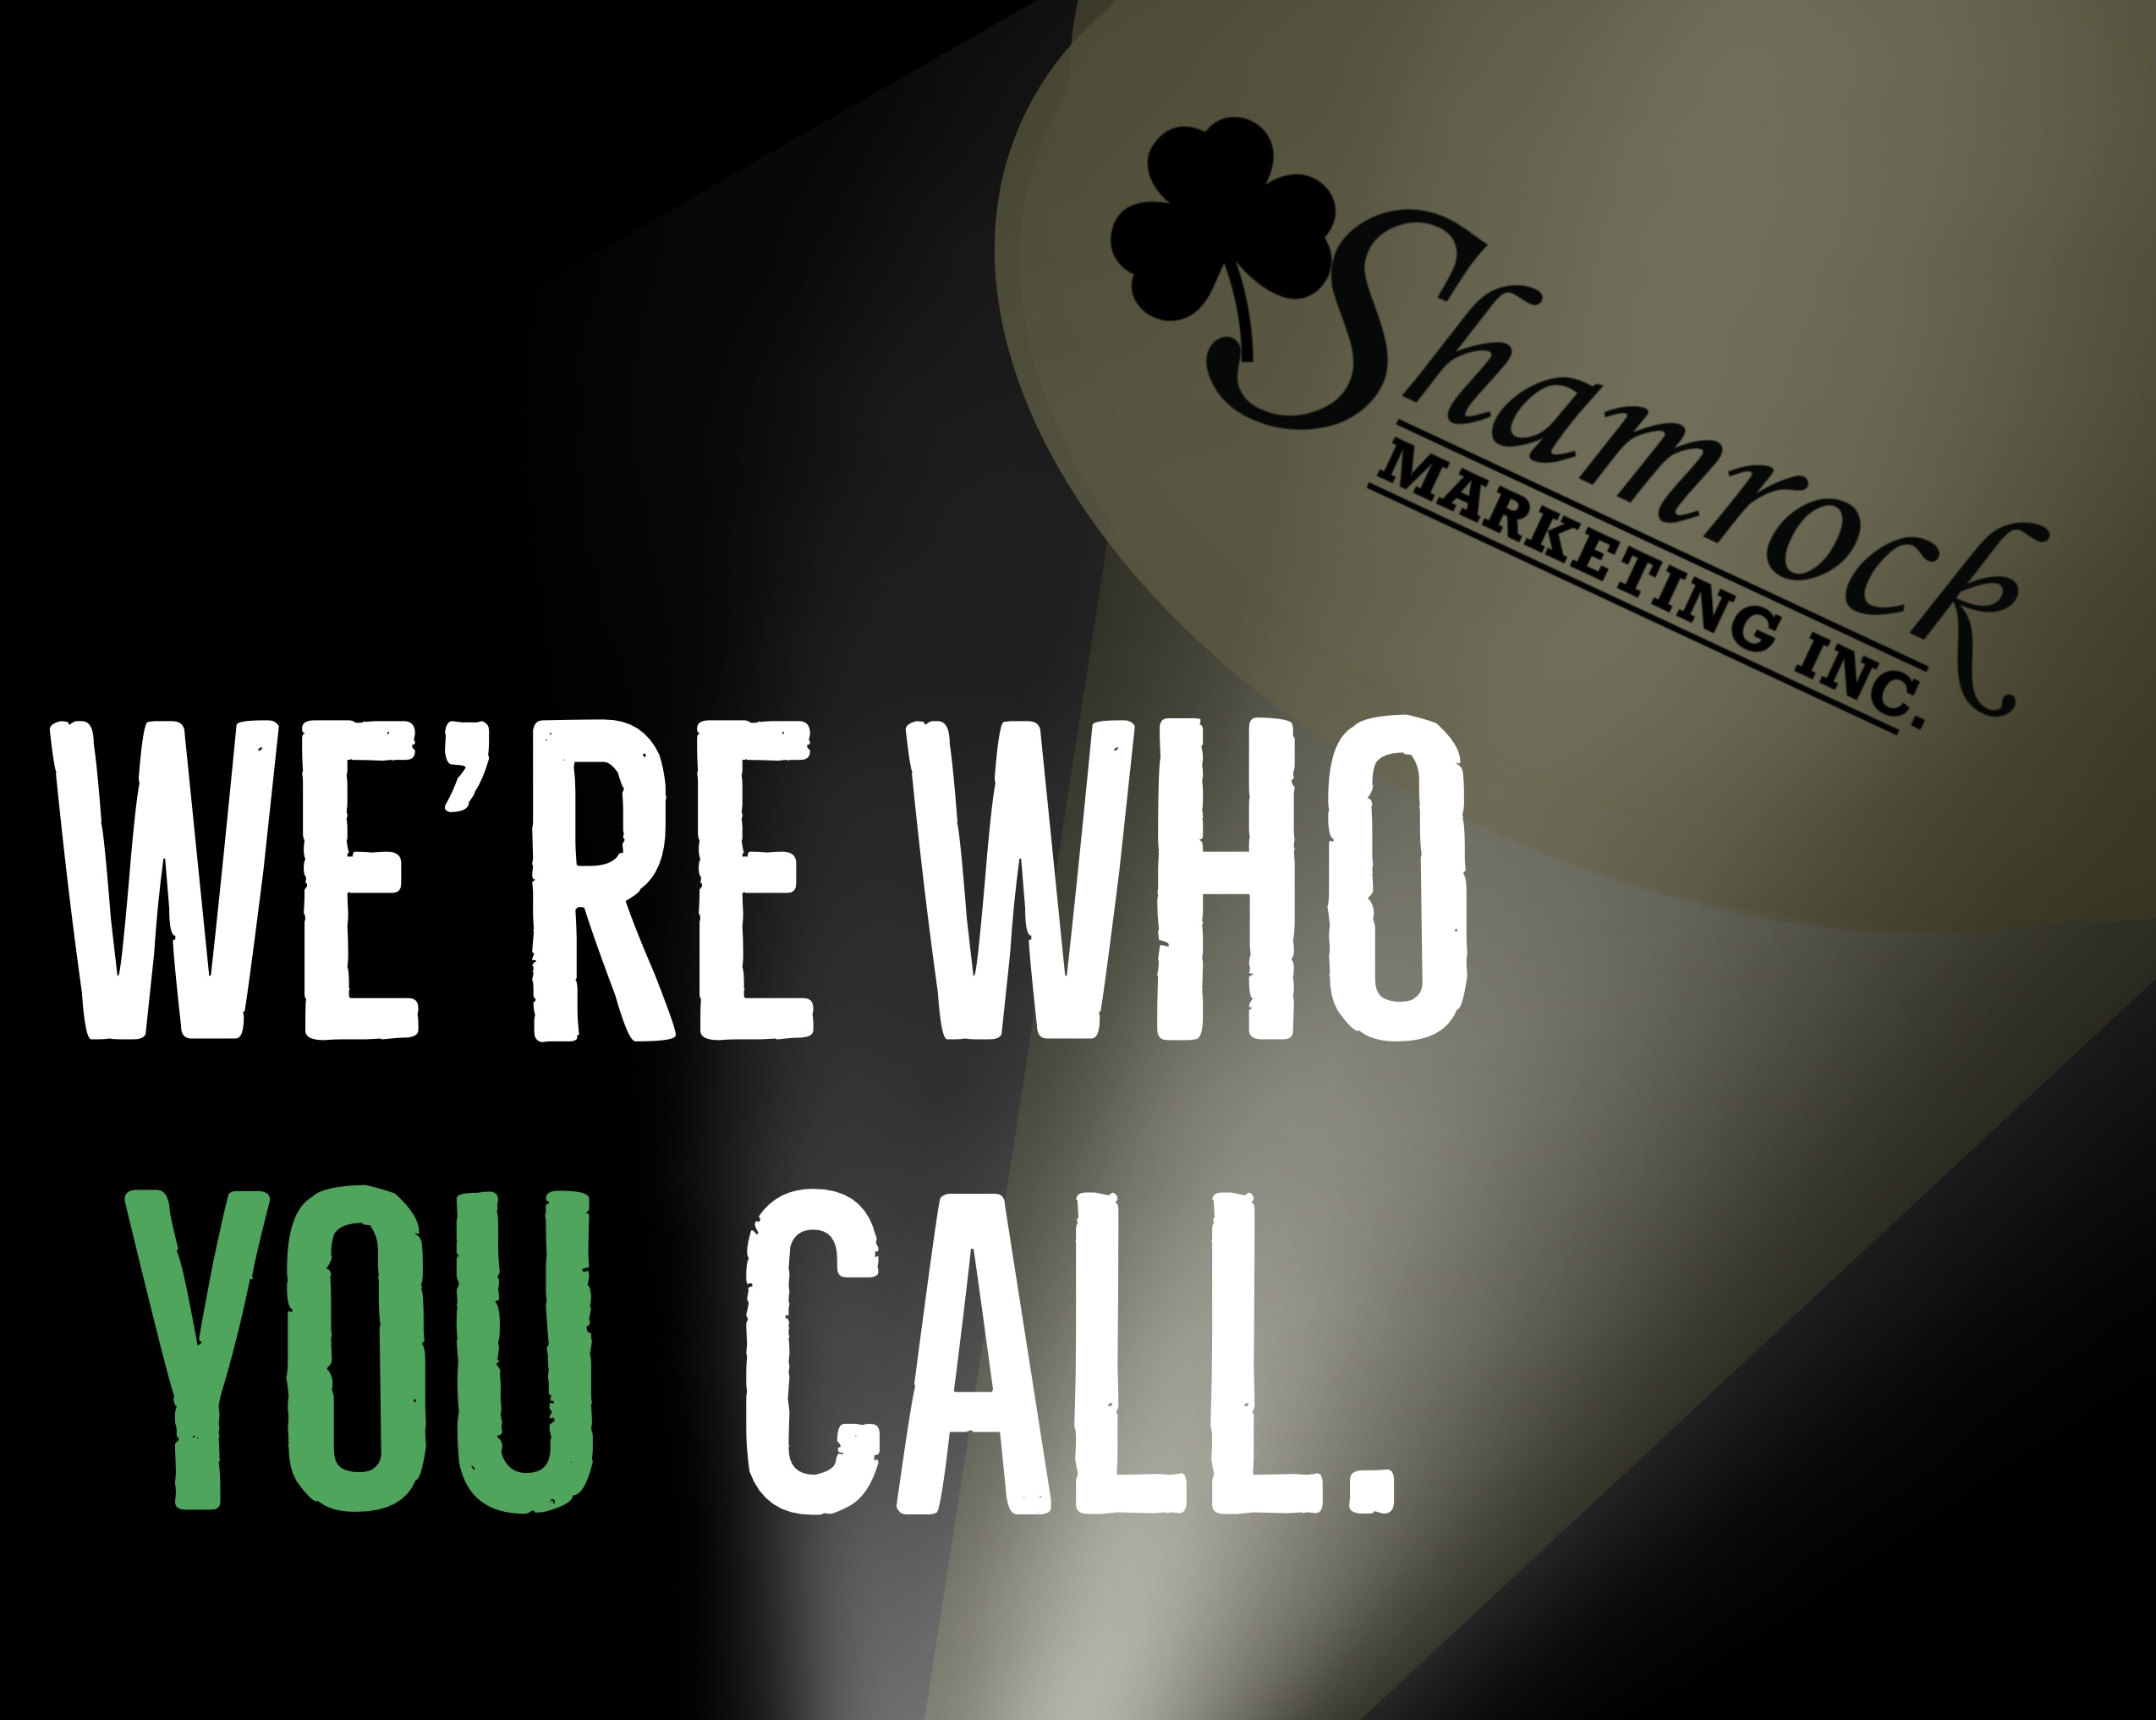 We're Who You Call!